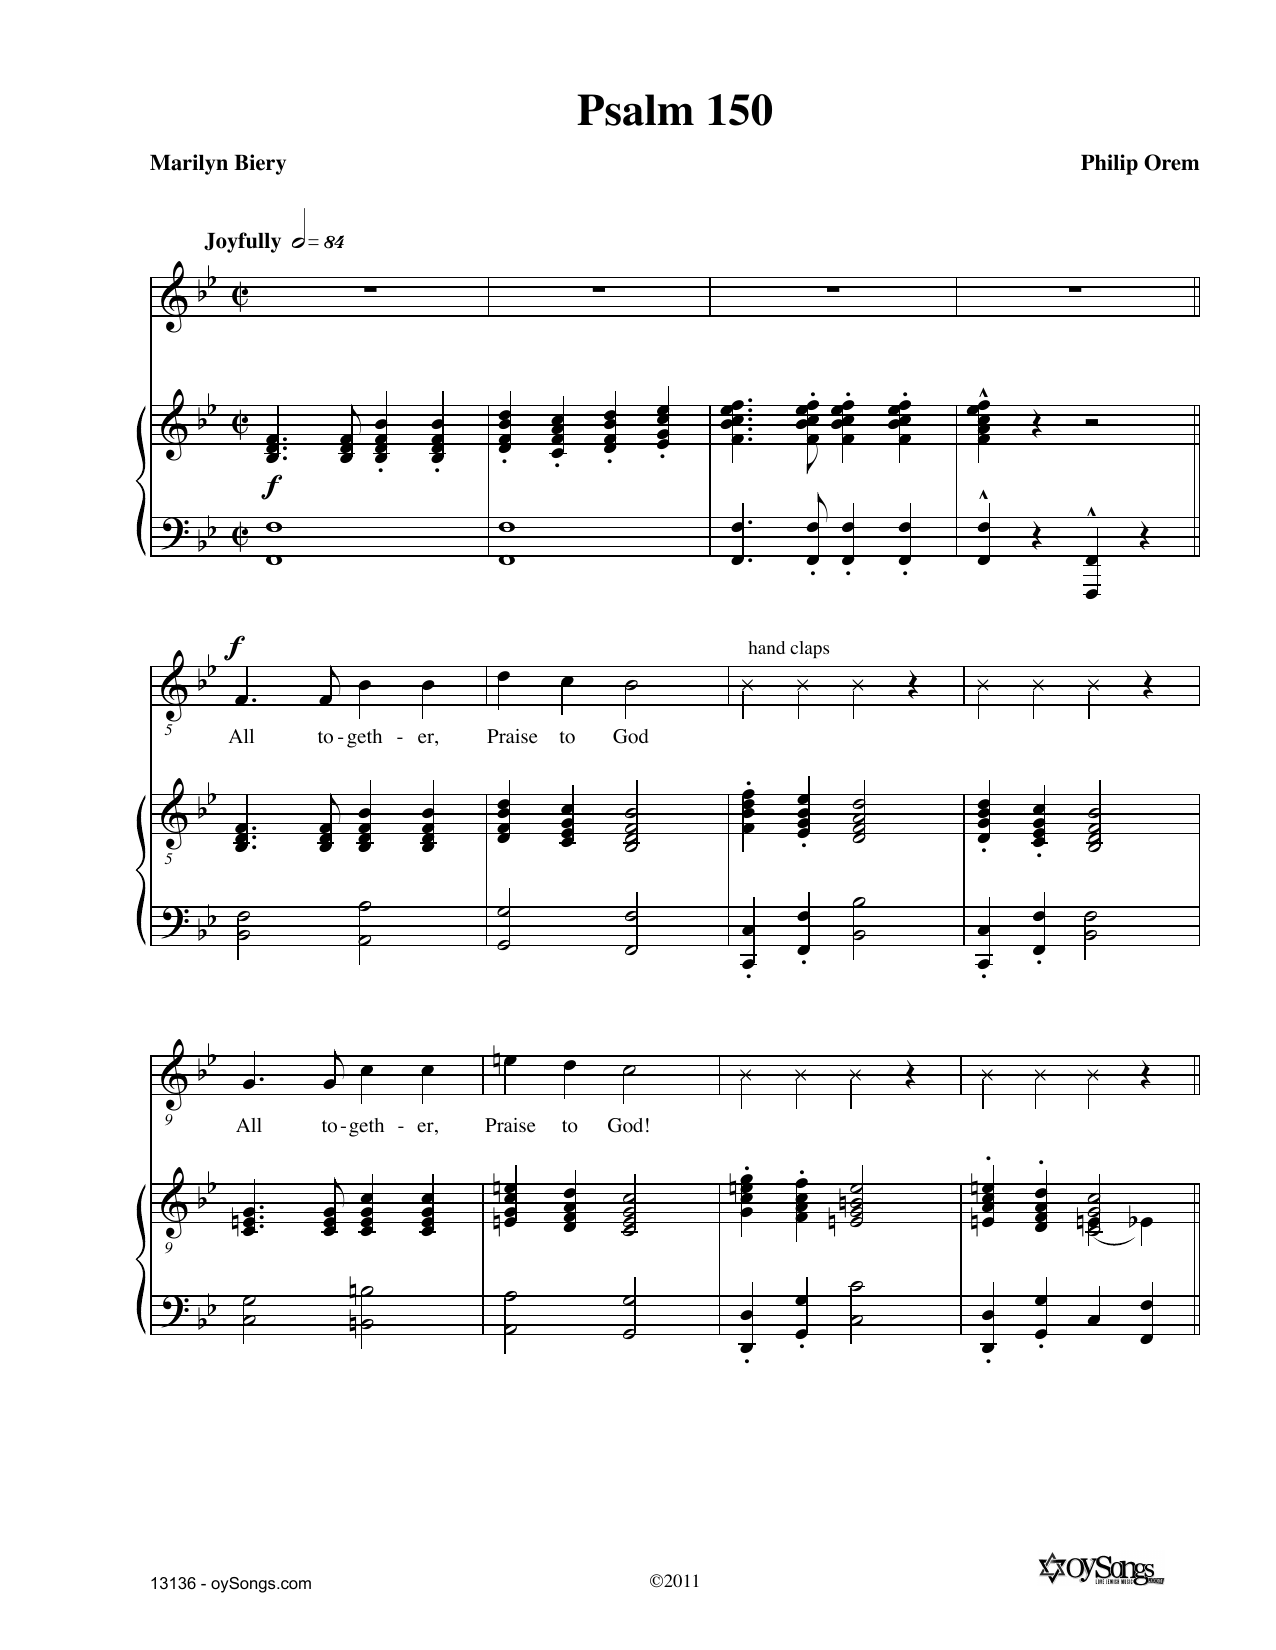 Download Philip Orem Psalm 150 Sheet Music